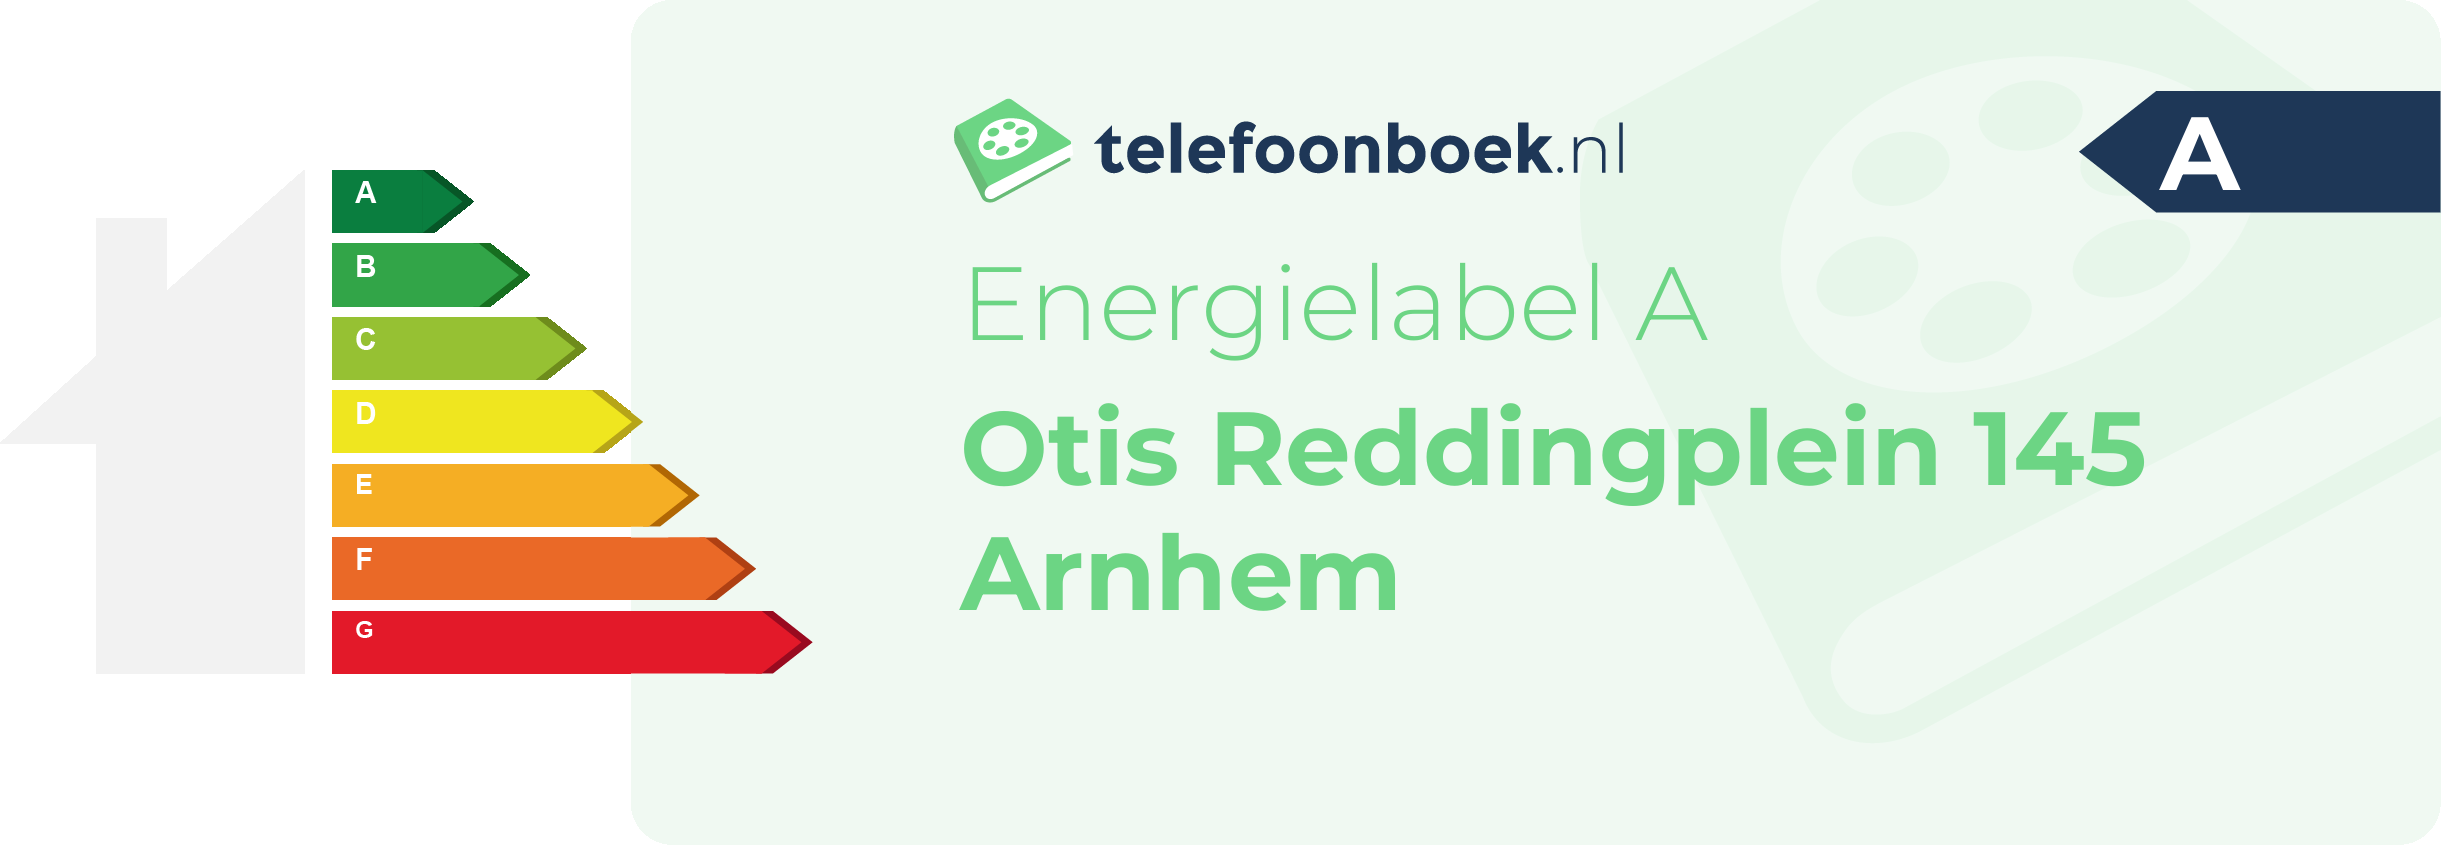 Energielabel Otis Reddingplein 145 Arnhem